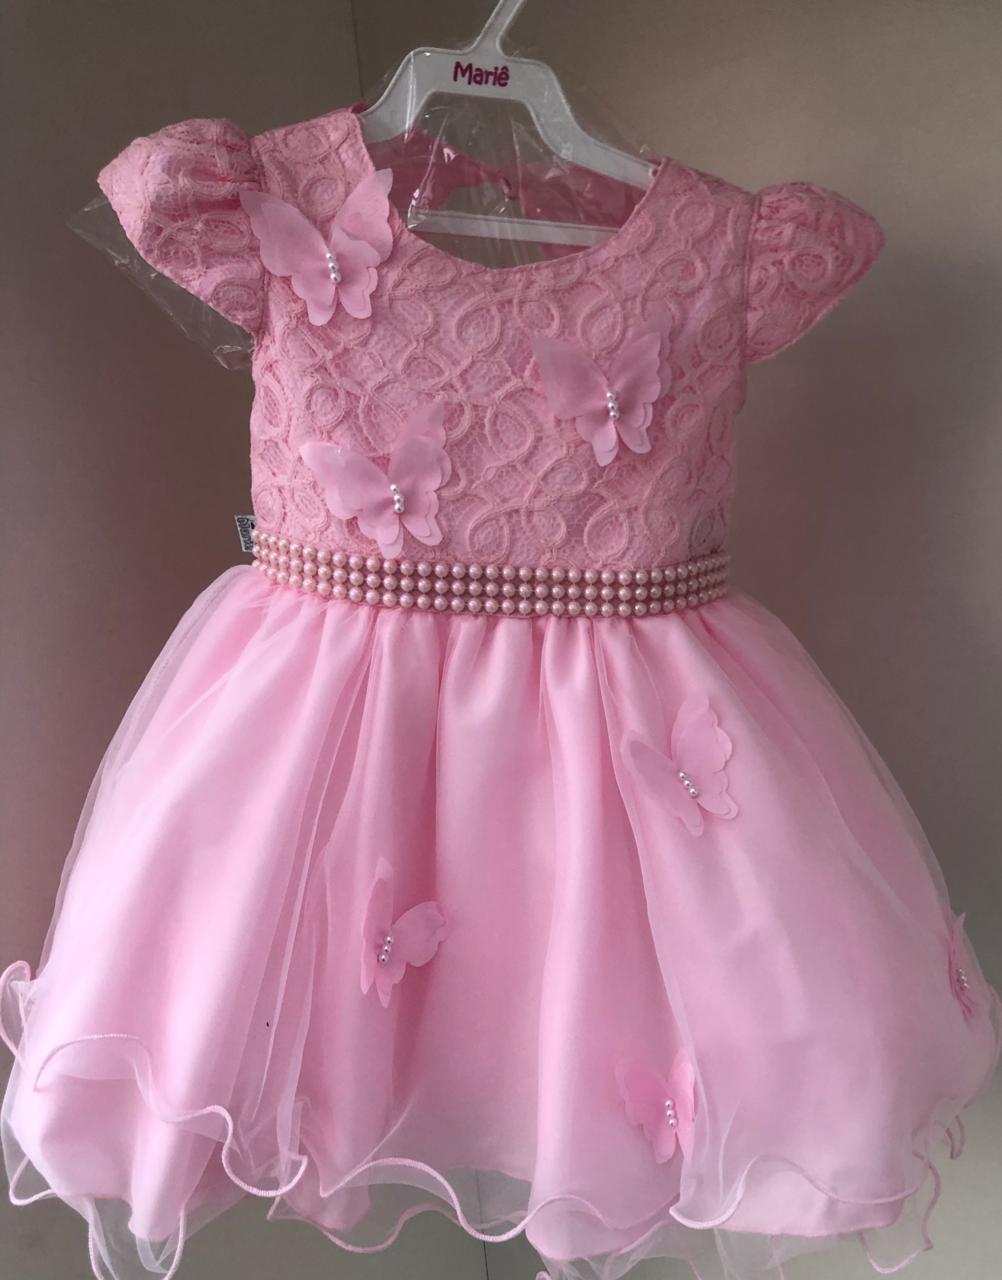 Vestido Infantil Rosa Aplique Borboletas Luxo Cinto Pérolas